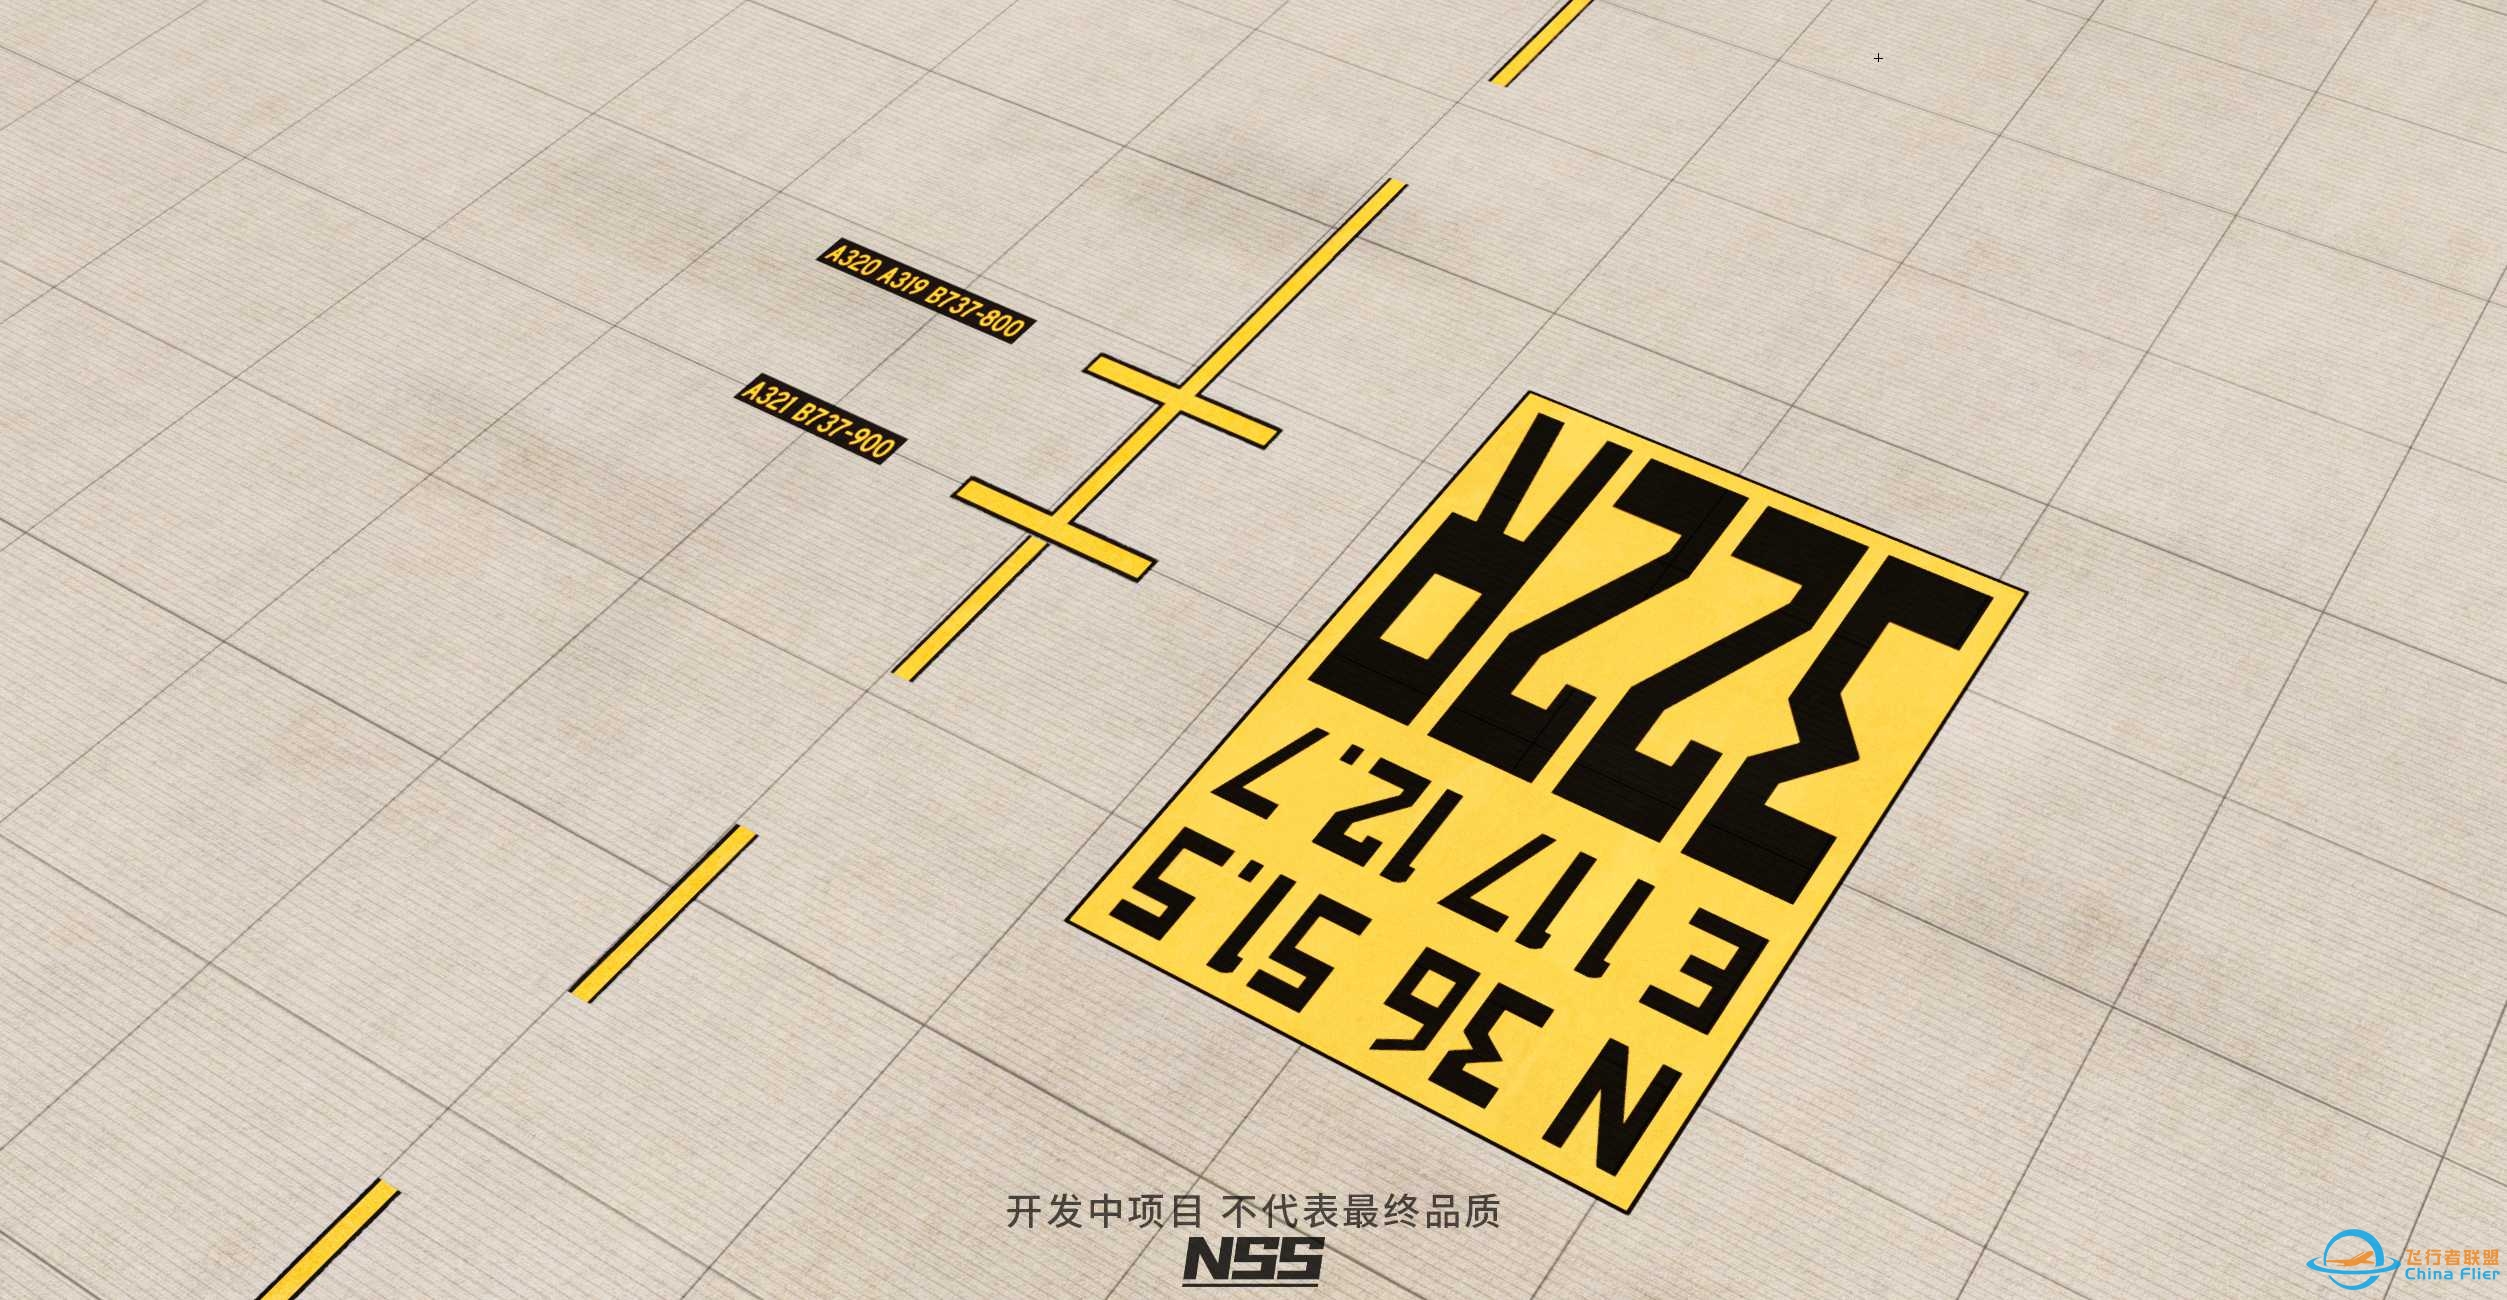 NSS地景开发组 ZSJN 济南遥墙国际机场项目预览 兼公布-1561 